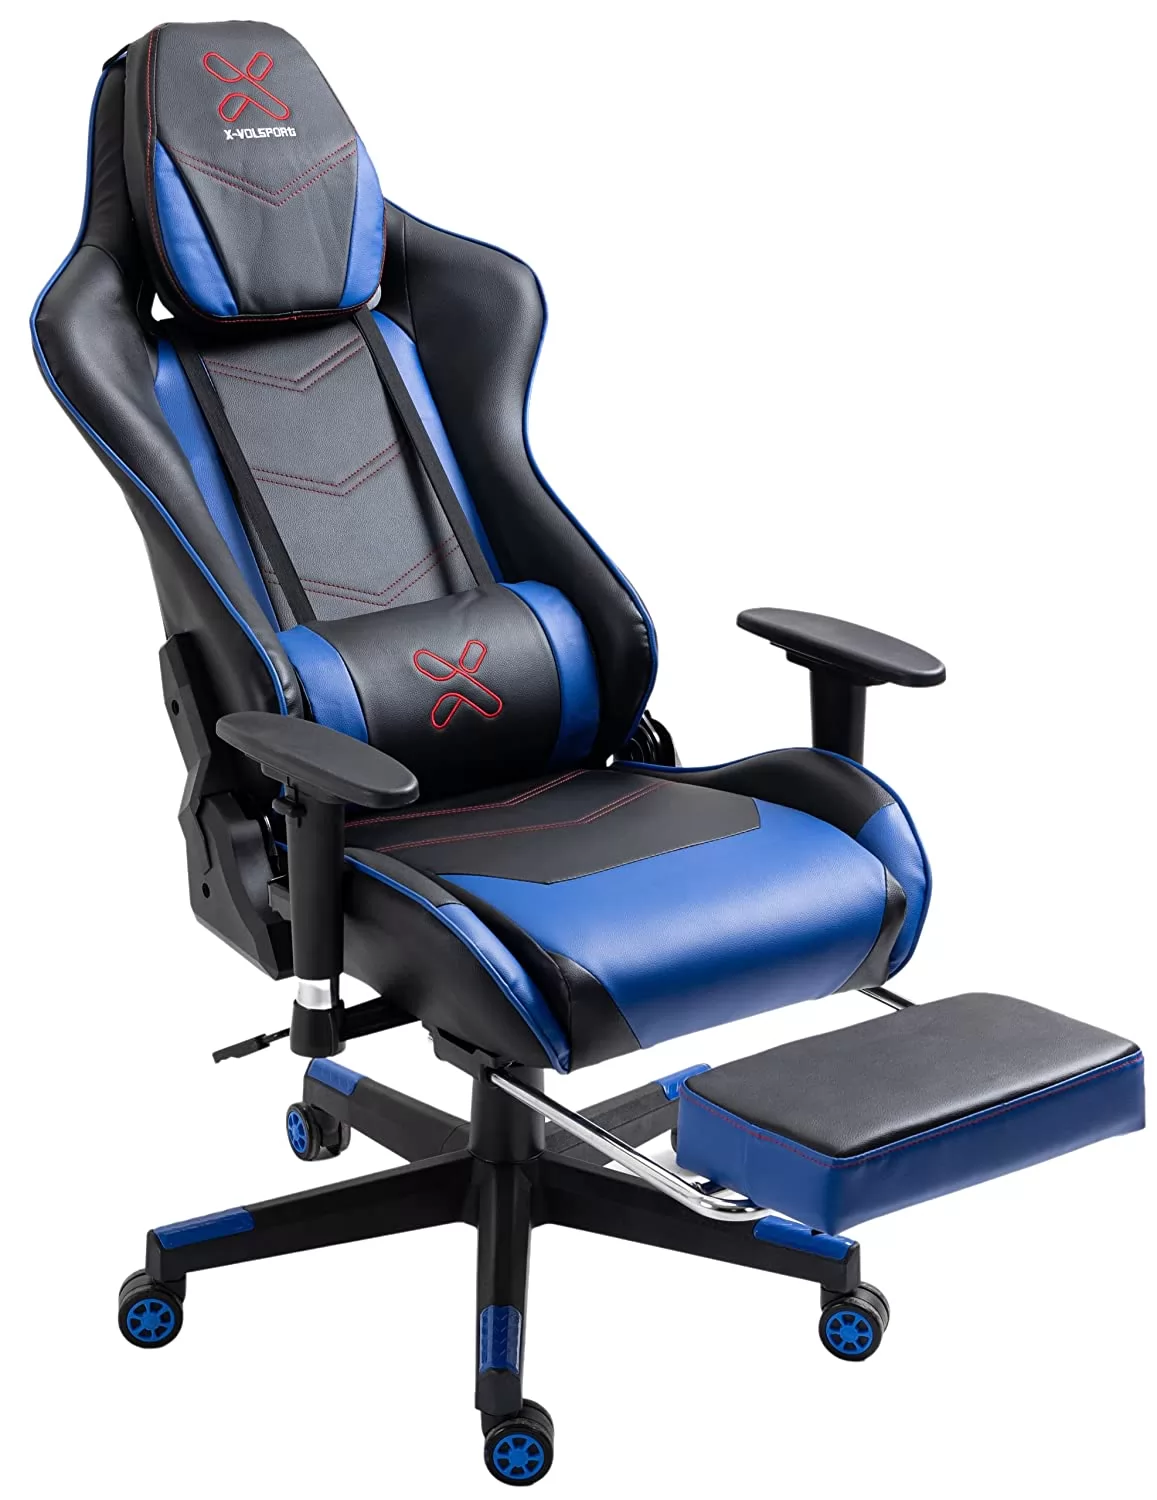 X Volsport Racing Edition Ergonomic Gaming Chair